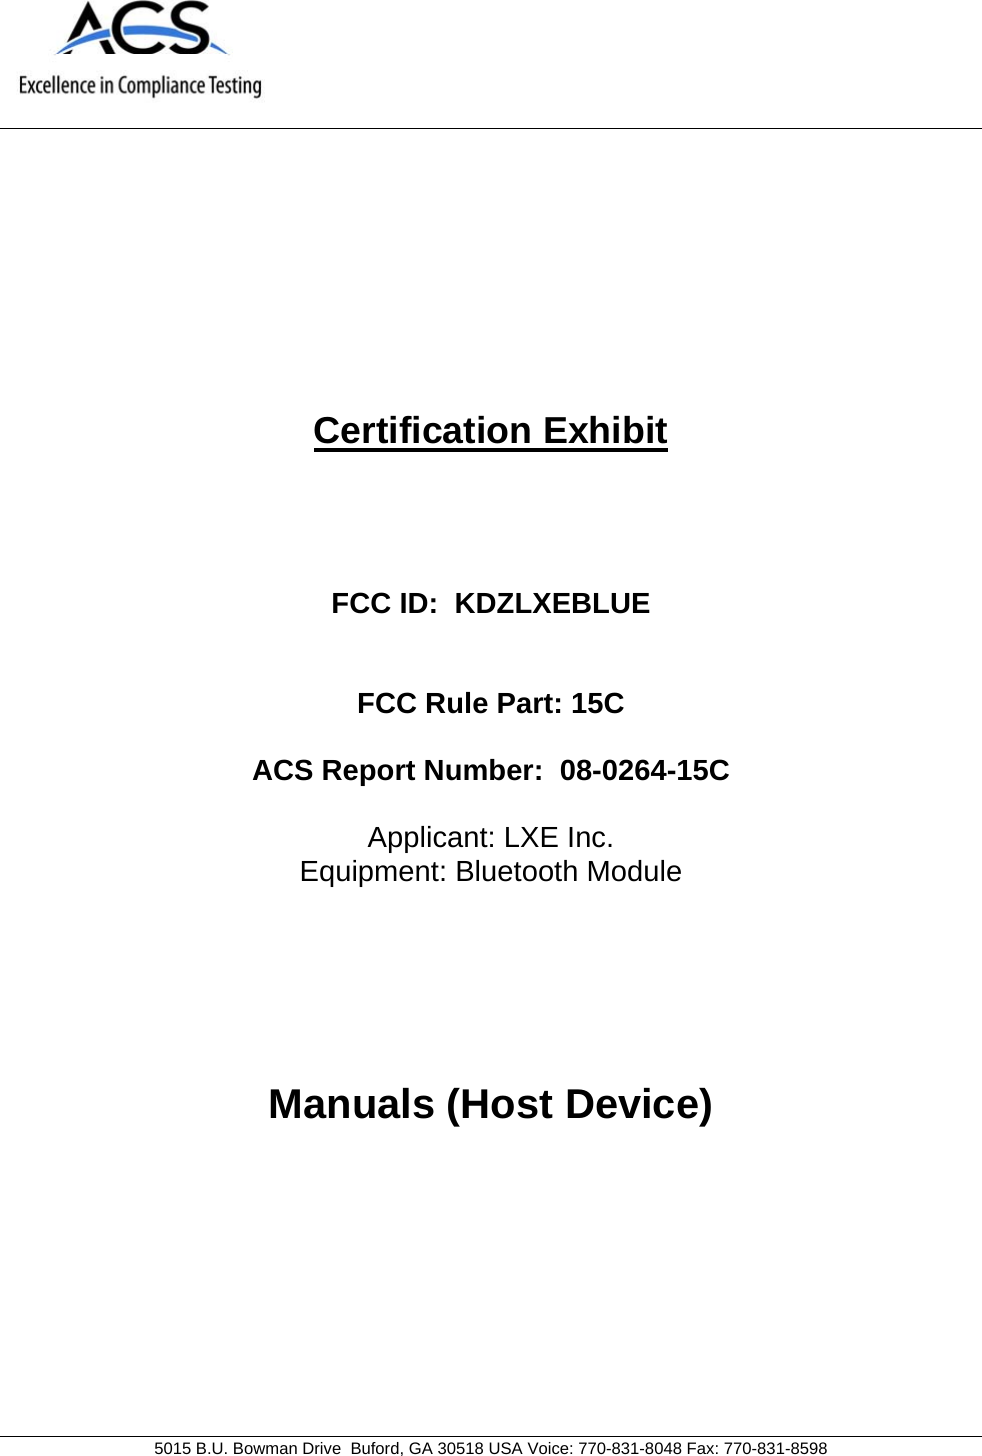     5015 B.U. Bowman Drive  Buford, GA 30518 USA Voice: 770-831-8048 Fax: 770-831-8598   Certification Exhibit     FCC ID:  KDZLXEBLUE   FCC Rule Part: 15C  ACS Report Number:  08-0264-15C   Applicant: LXE Inc. Equipment: Bluetooth Module     Manuals (Host Device)  